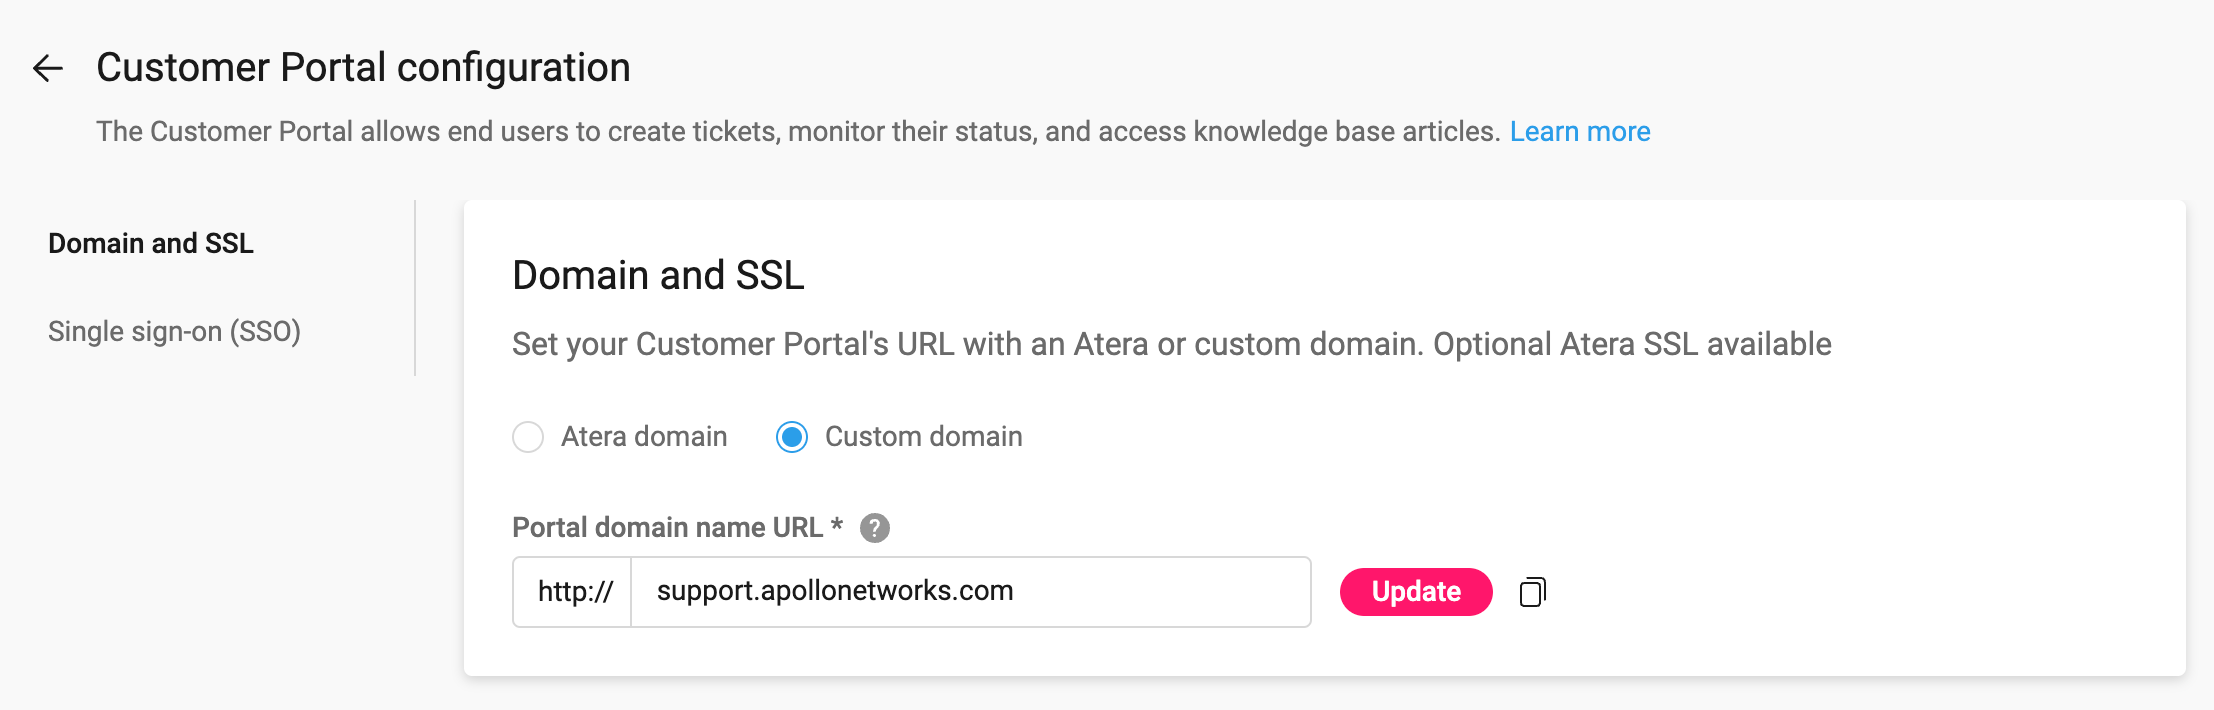 Customer Portal - Custom Domain SSL - MSP - EN.png